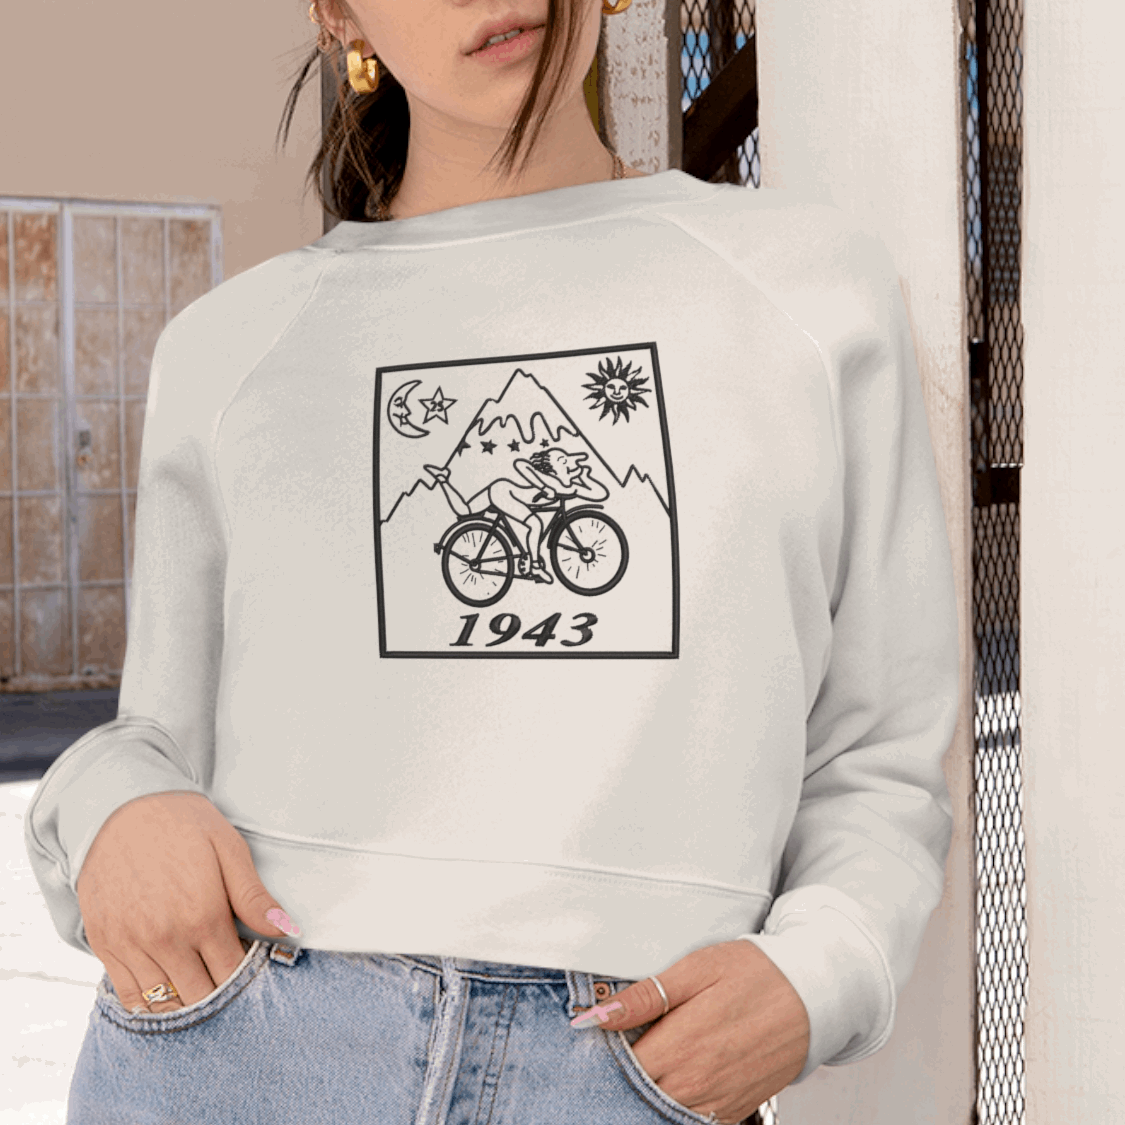 Albert Hofmann Bicycle Day 1943 - Black minimalist : Embroidery Design - FineryEmbroidery